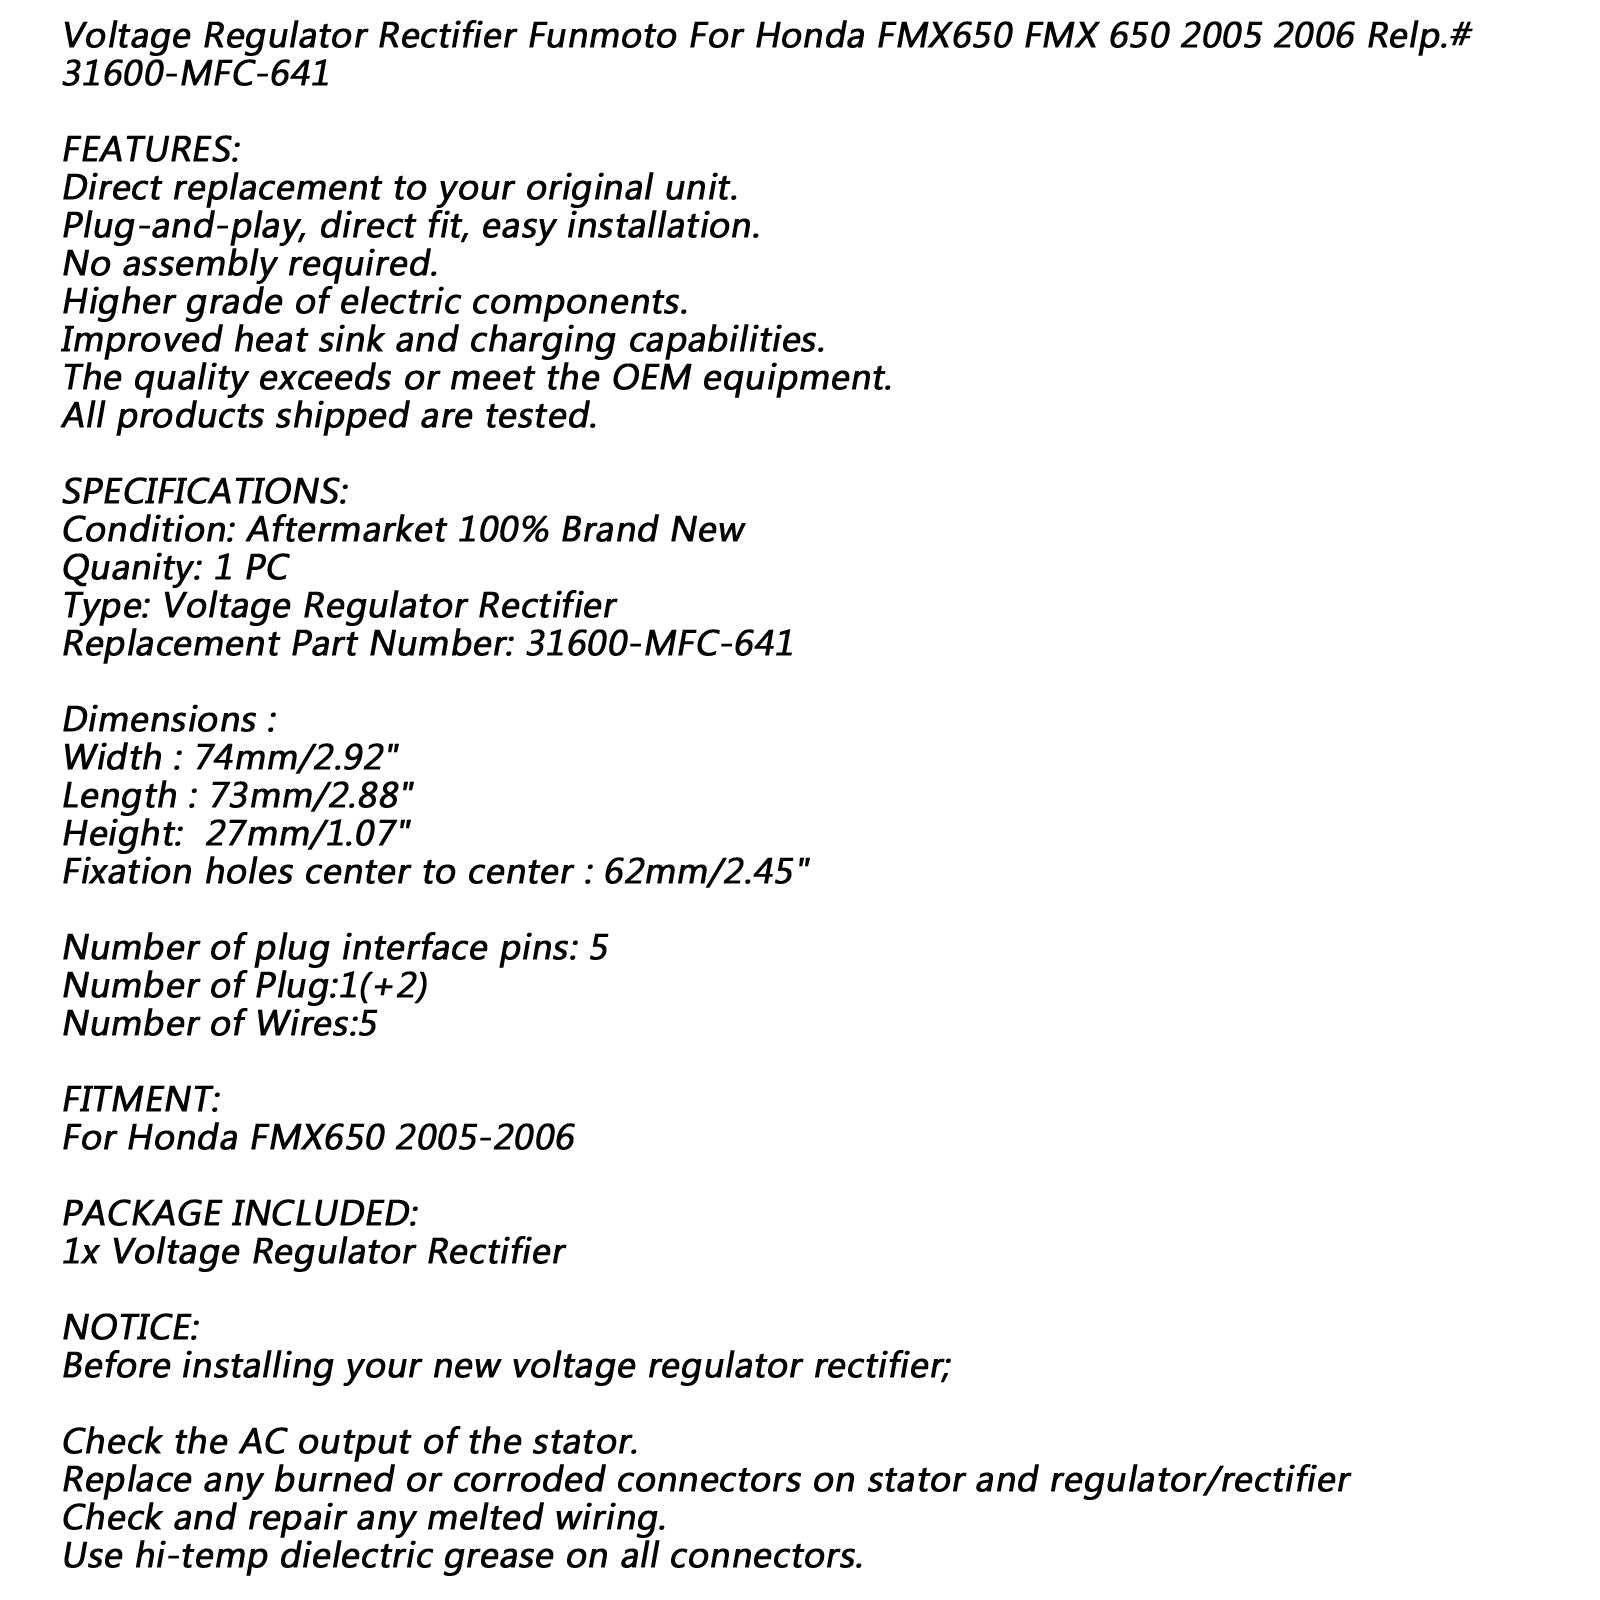 Regulador rectificador de voltaje para Honda FMX650 2005-2006 Repl. # 31600-MFC-641 Genérico